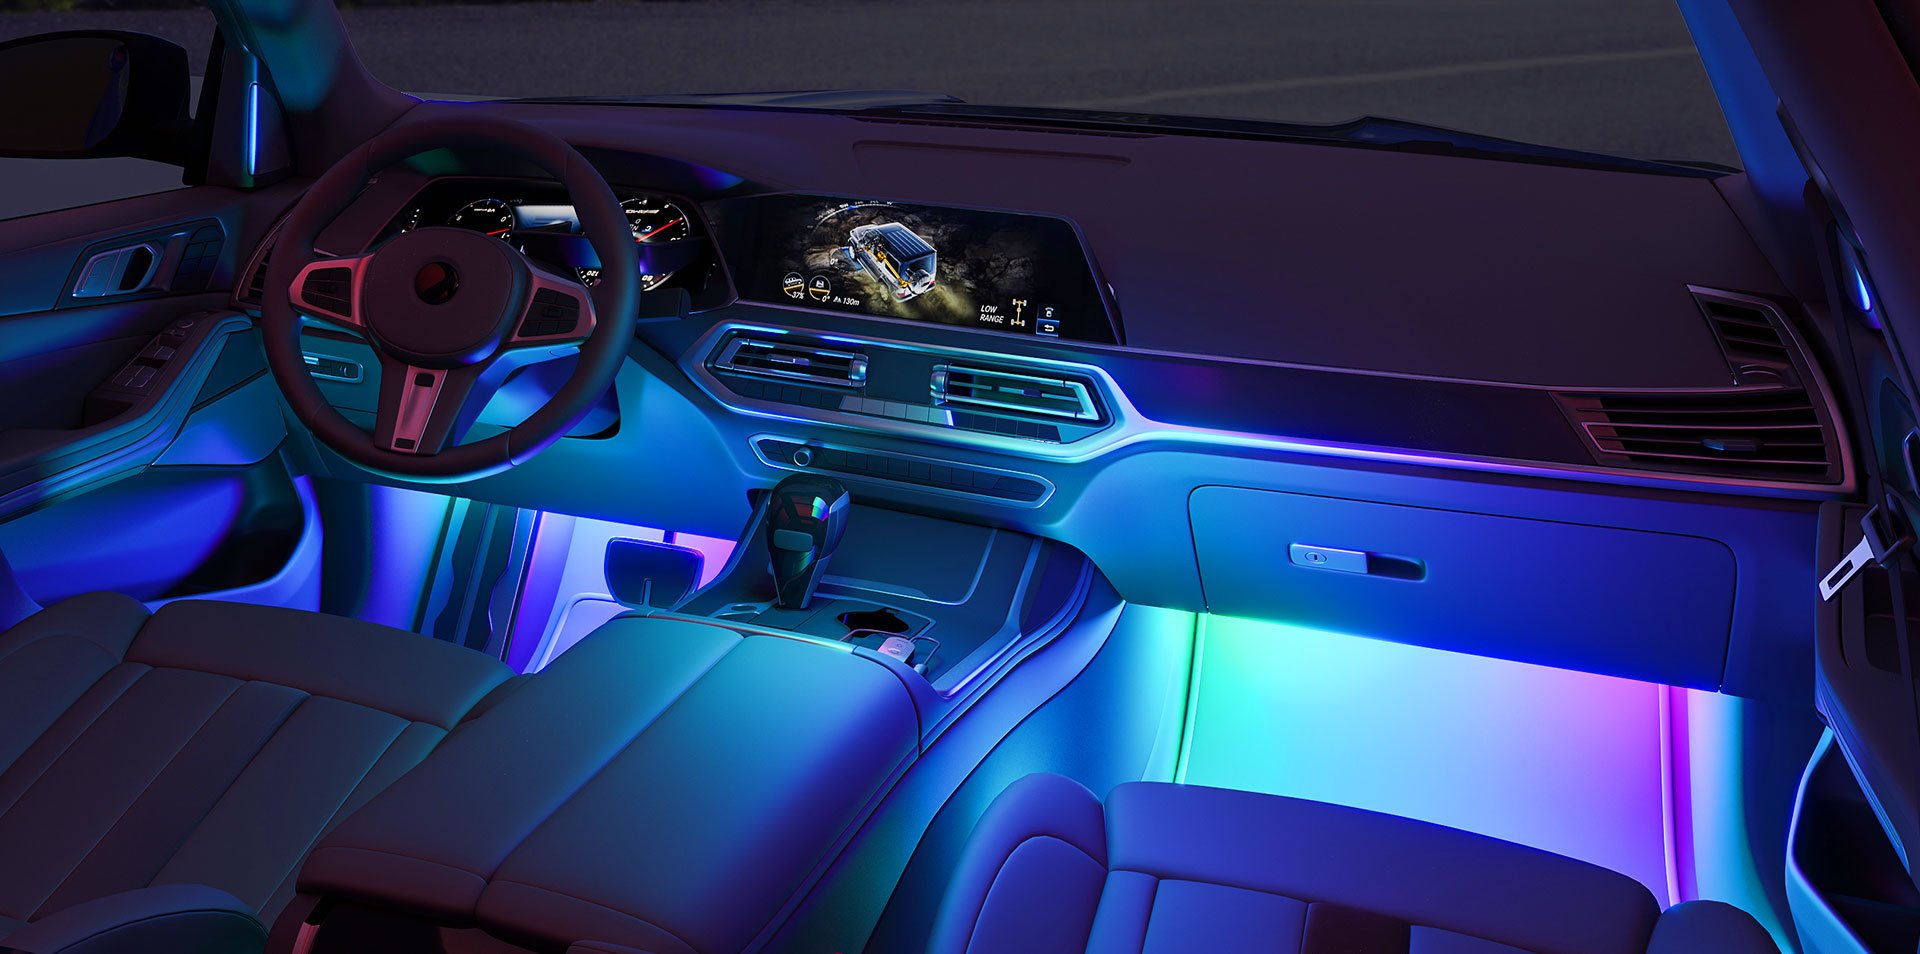 Govee Interior LED Car Light 48-in Smart Plug-in LED Under Cabinet